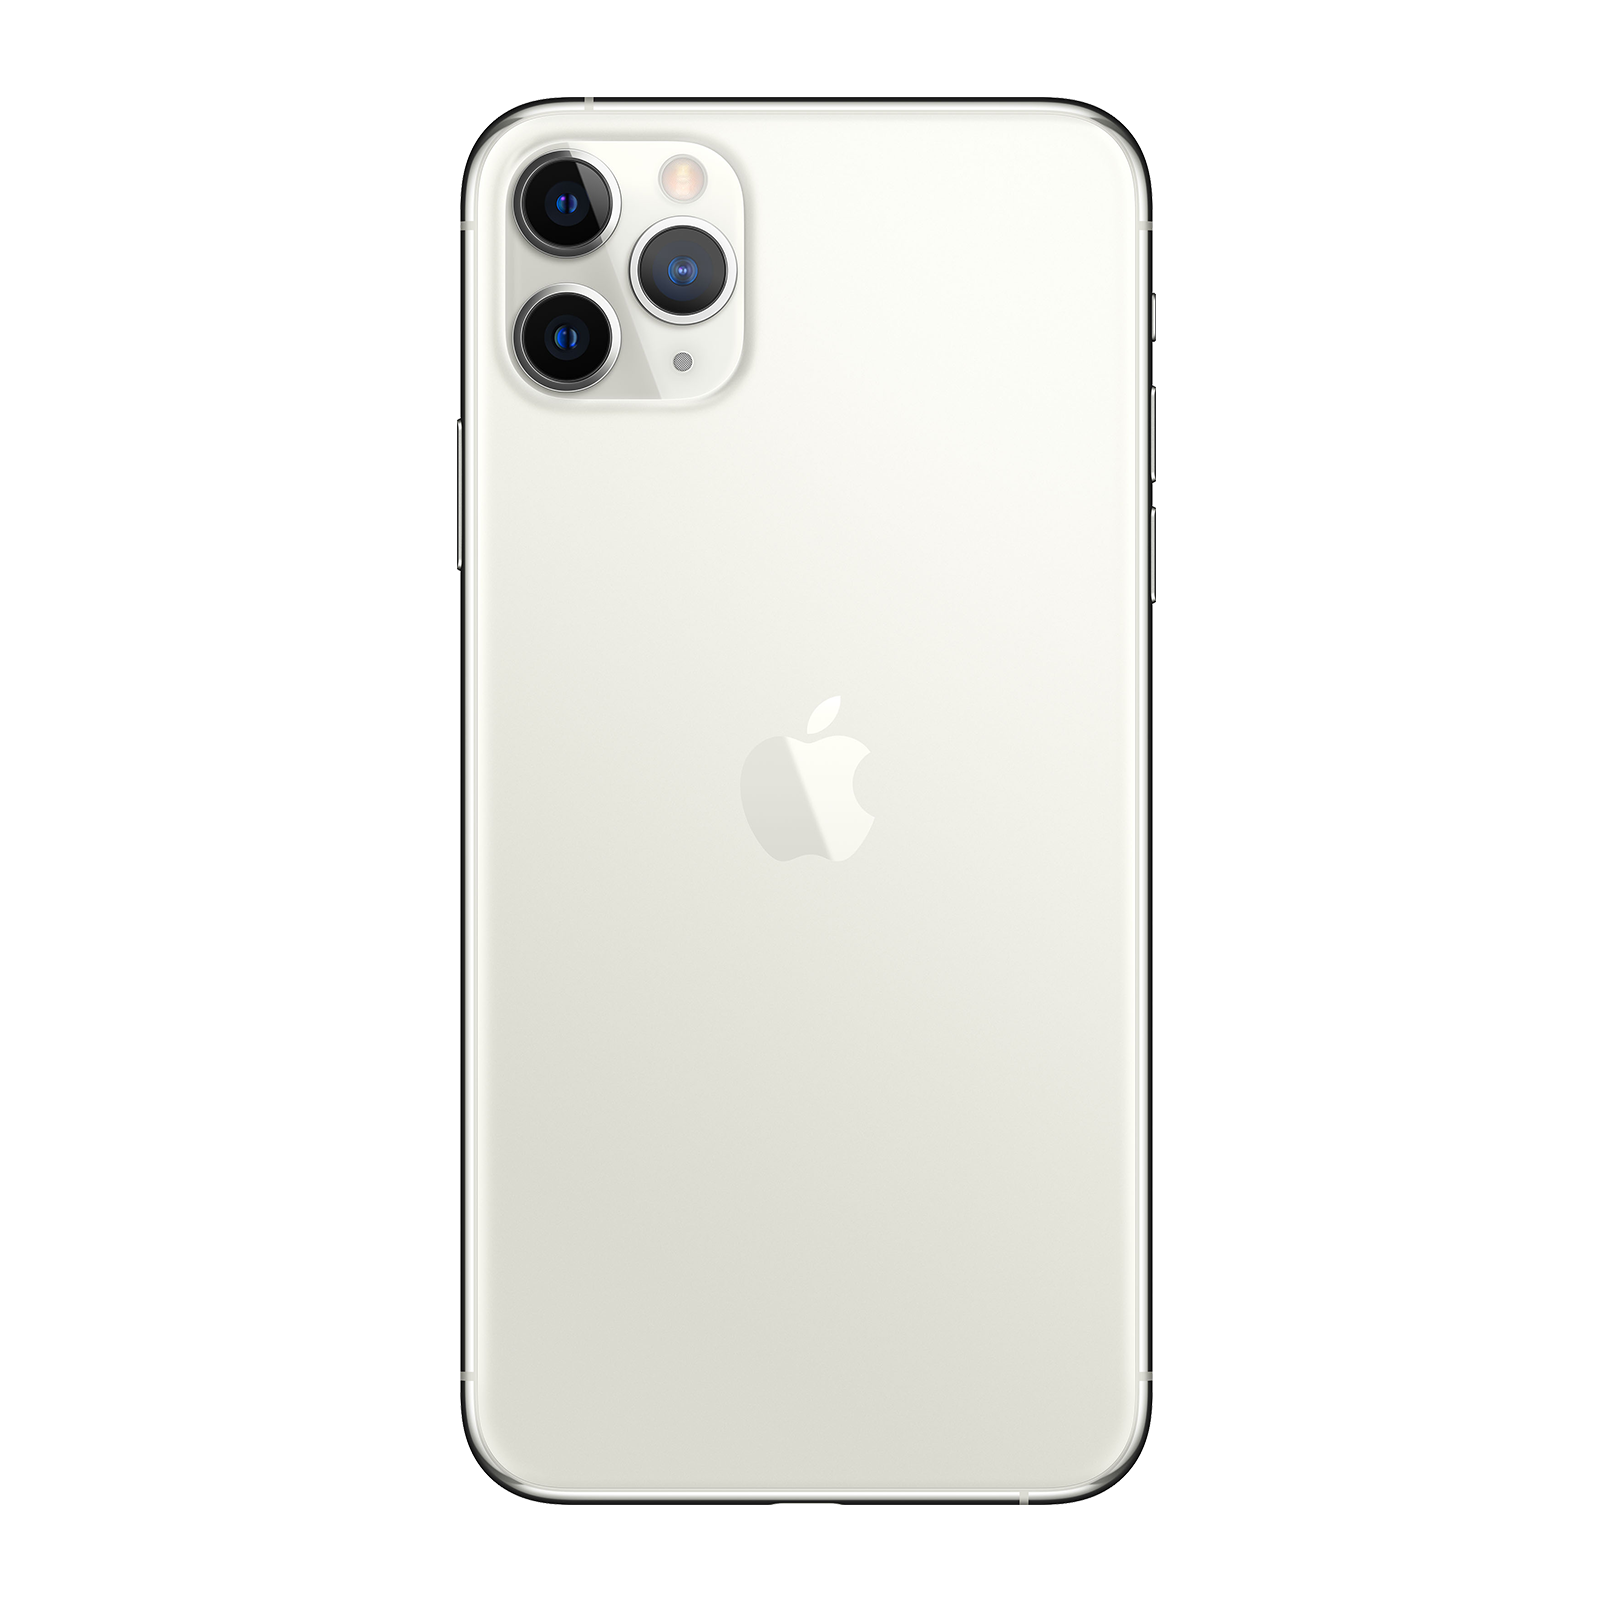 Apple iPhone 11 Pro Max 256GB Silver Very Good - Verizon